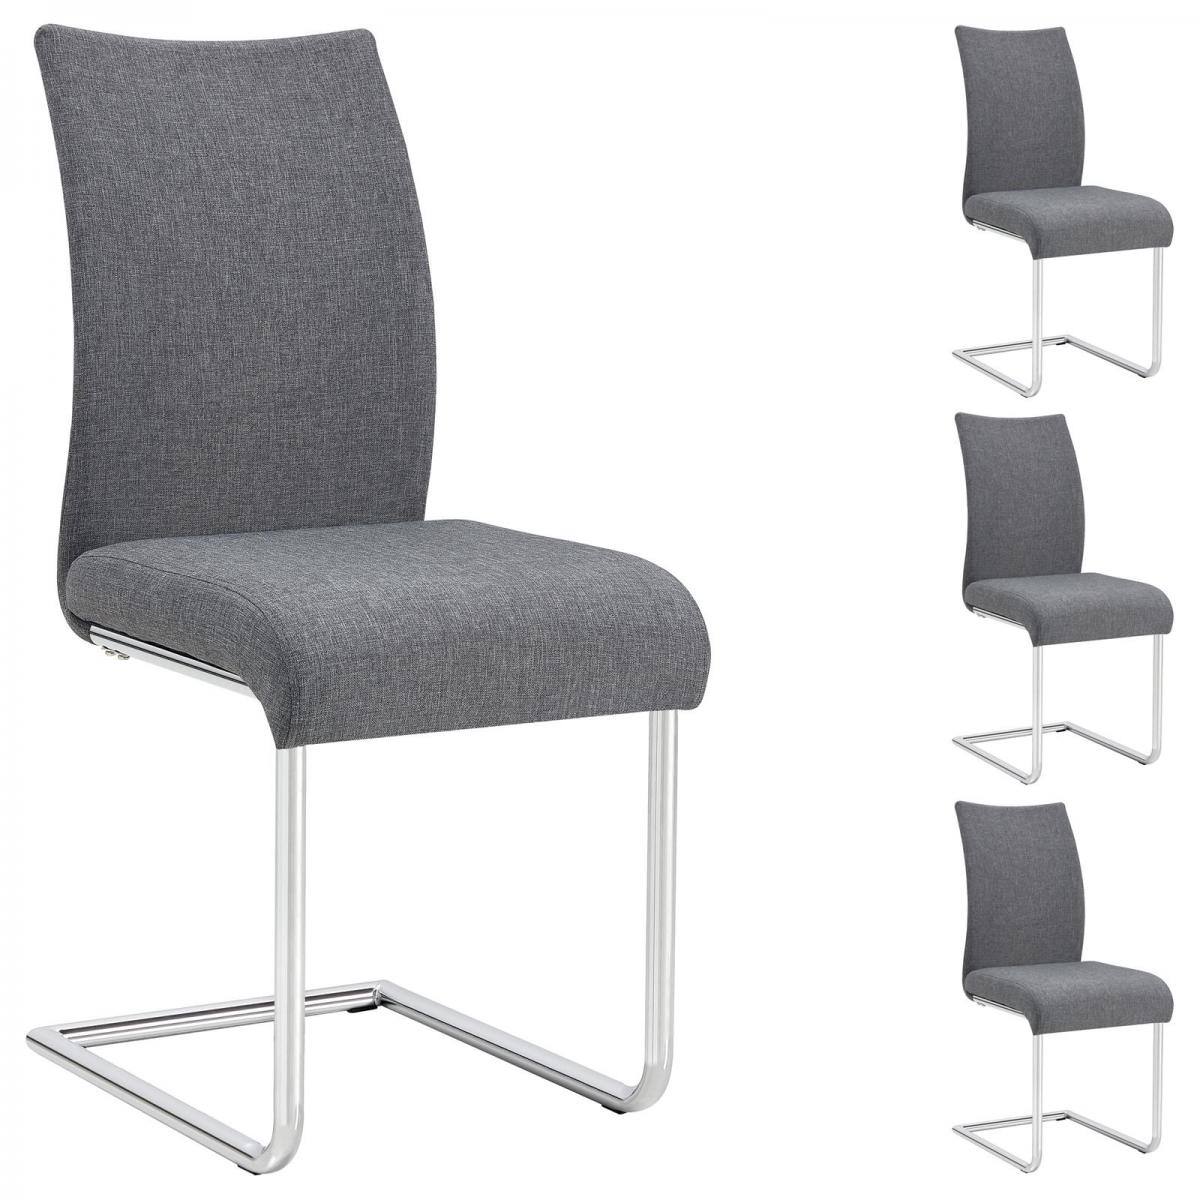 Idimex - Lot de 4 chaises ALADINO, en tissu gris - Chaises